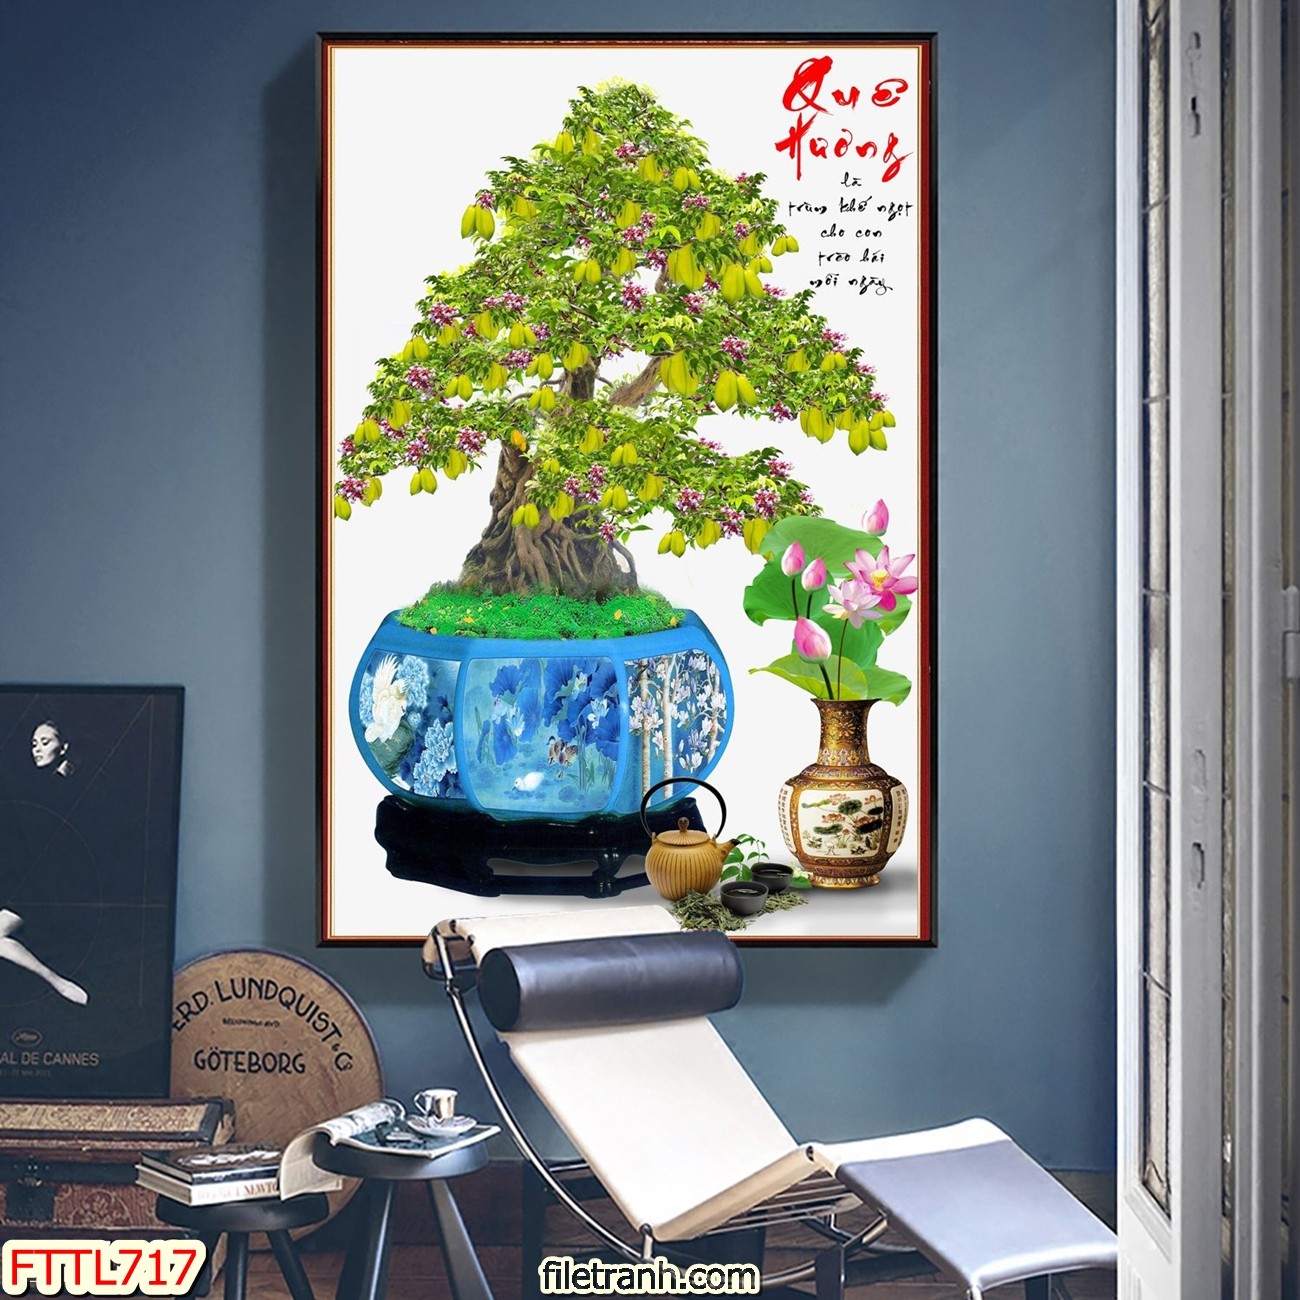 https://filetranh.com/file-tranh-chau-mai-bonsai/file-tranh-chau-mai-bonsai-fttl717.html